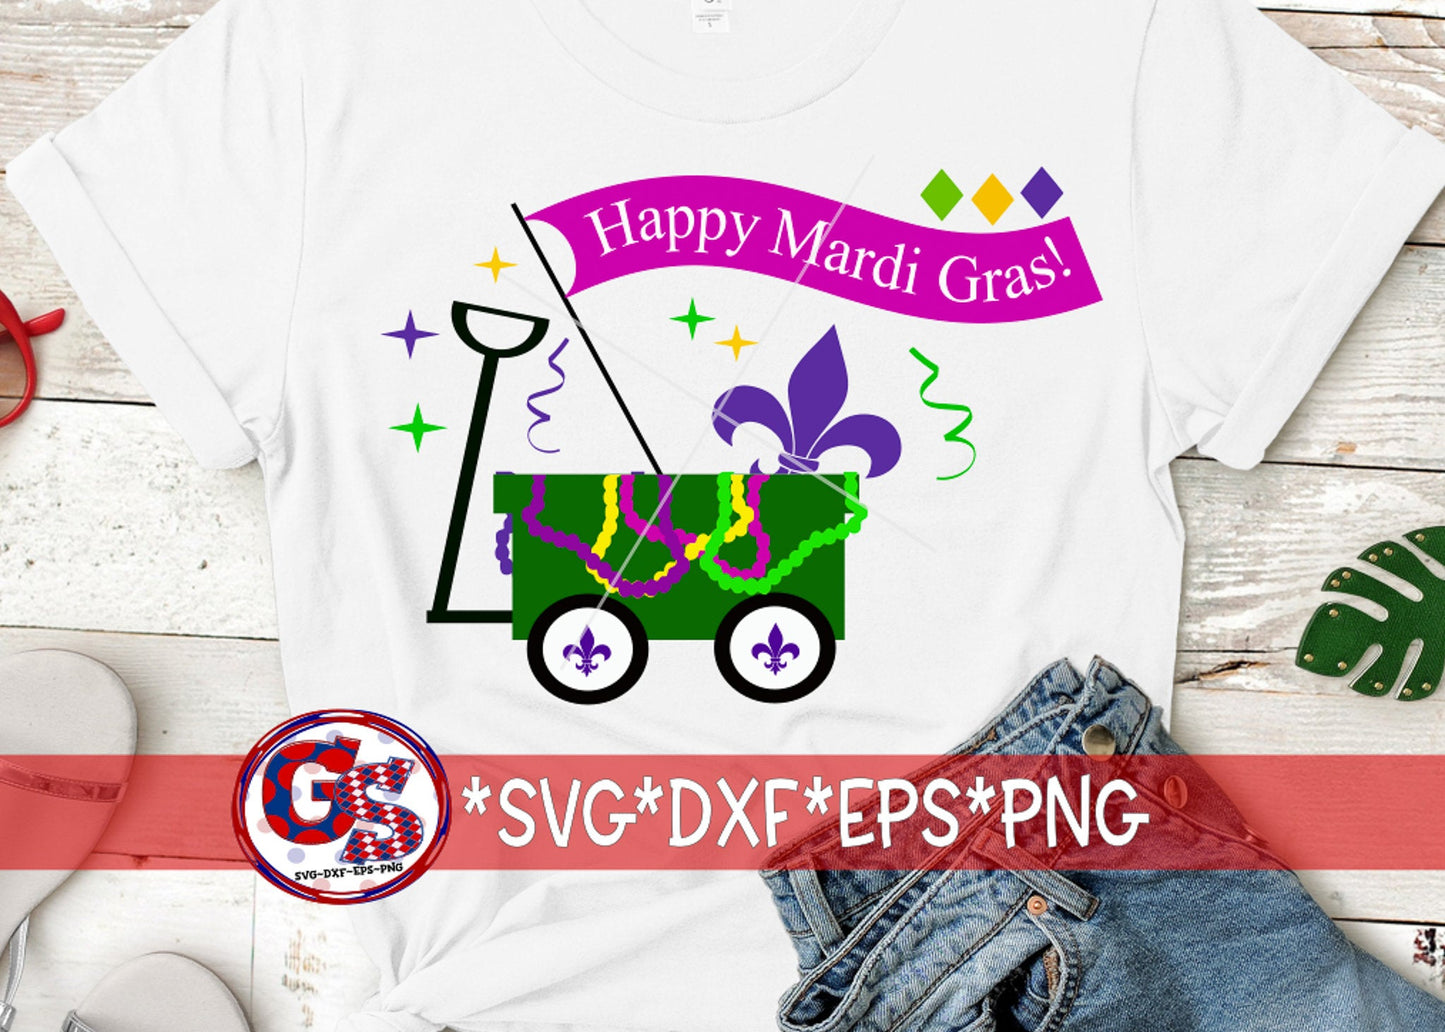 Mardi Gras Wagon SvG, DxF, EpS, PnG. Mardi Gras SvG | Wagon SvG | Fat Tuesday SvG | Happy Mardi Gras SvG | Instant Download Cut Files.